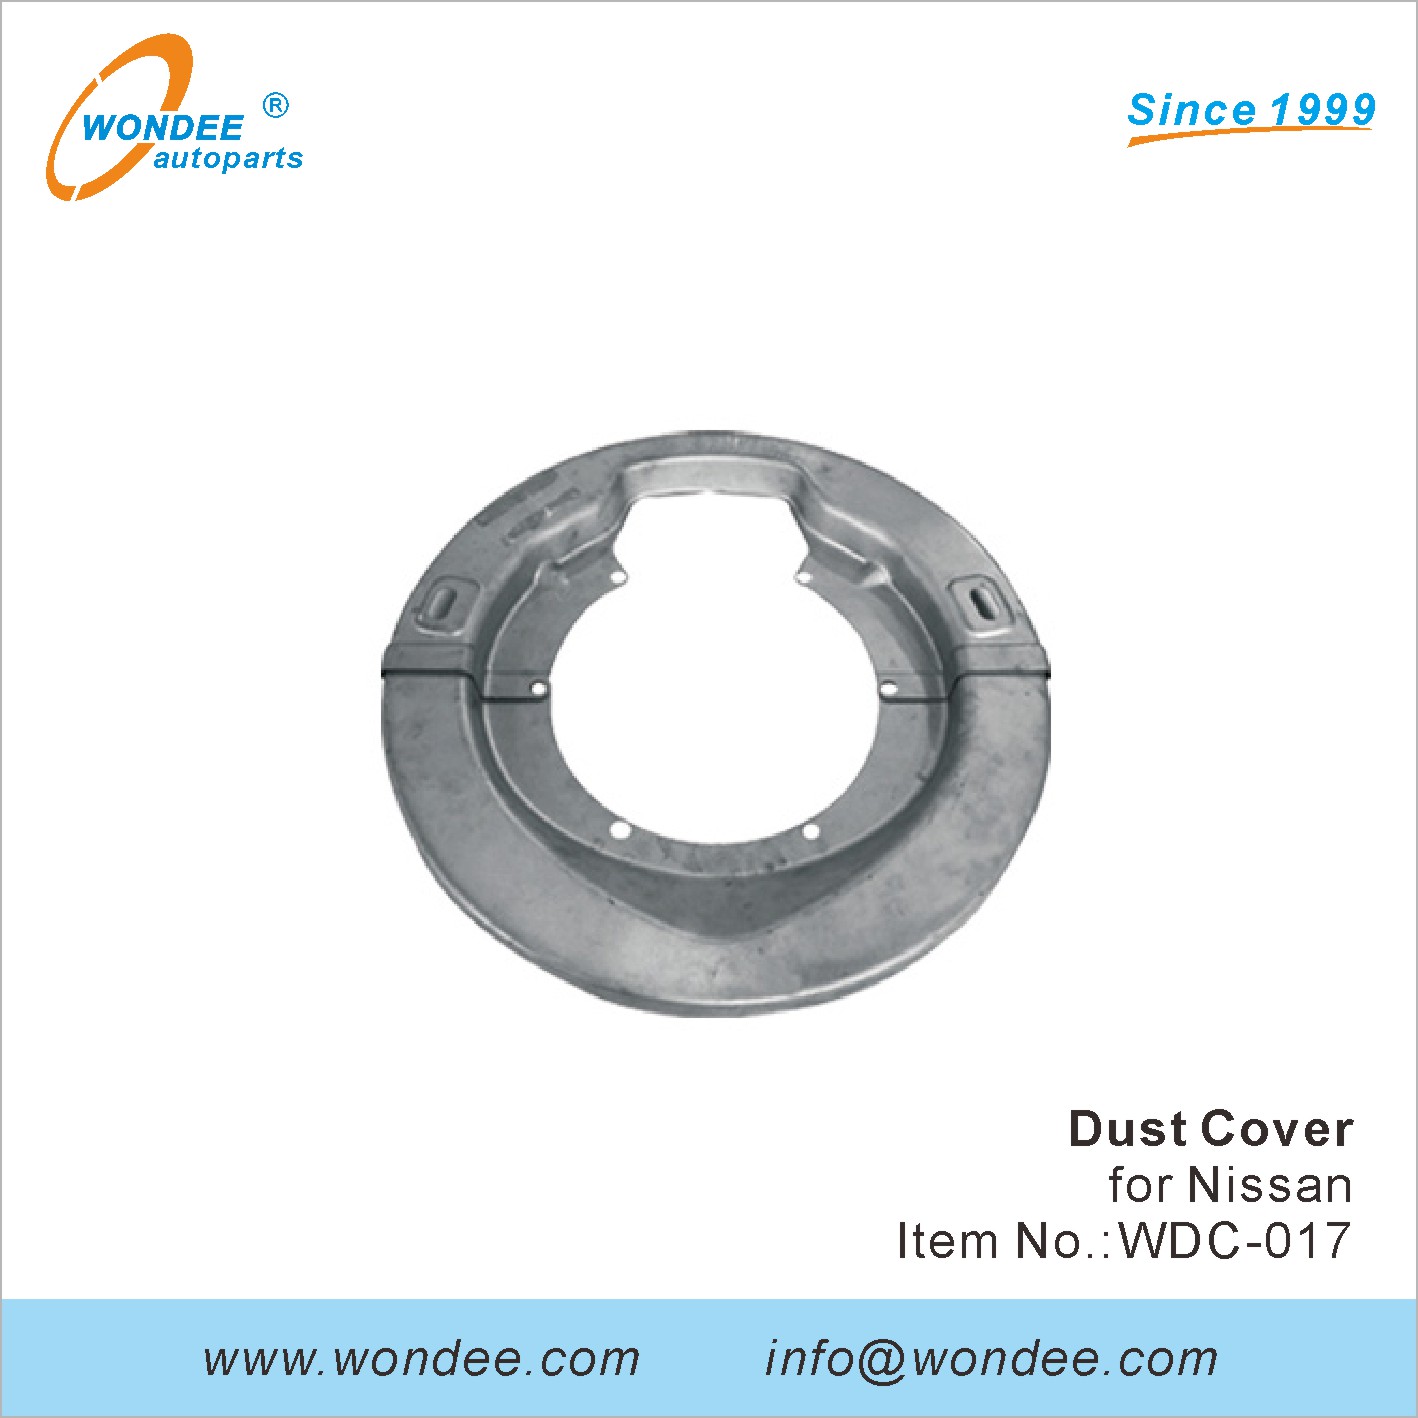 WONDEE dust cover (17)